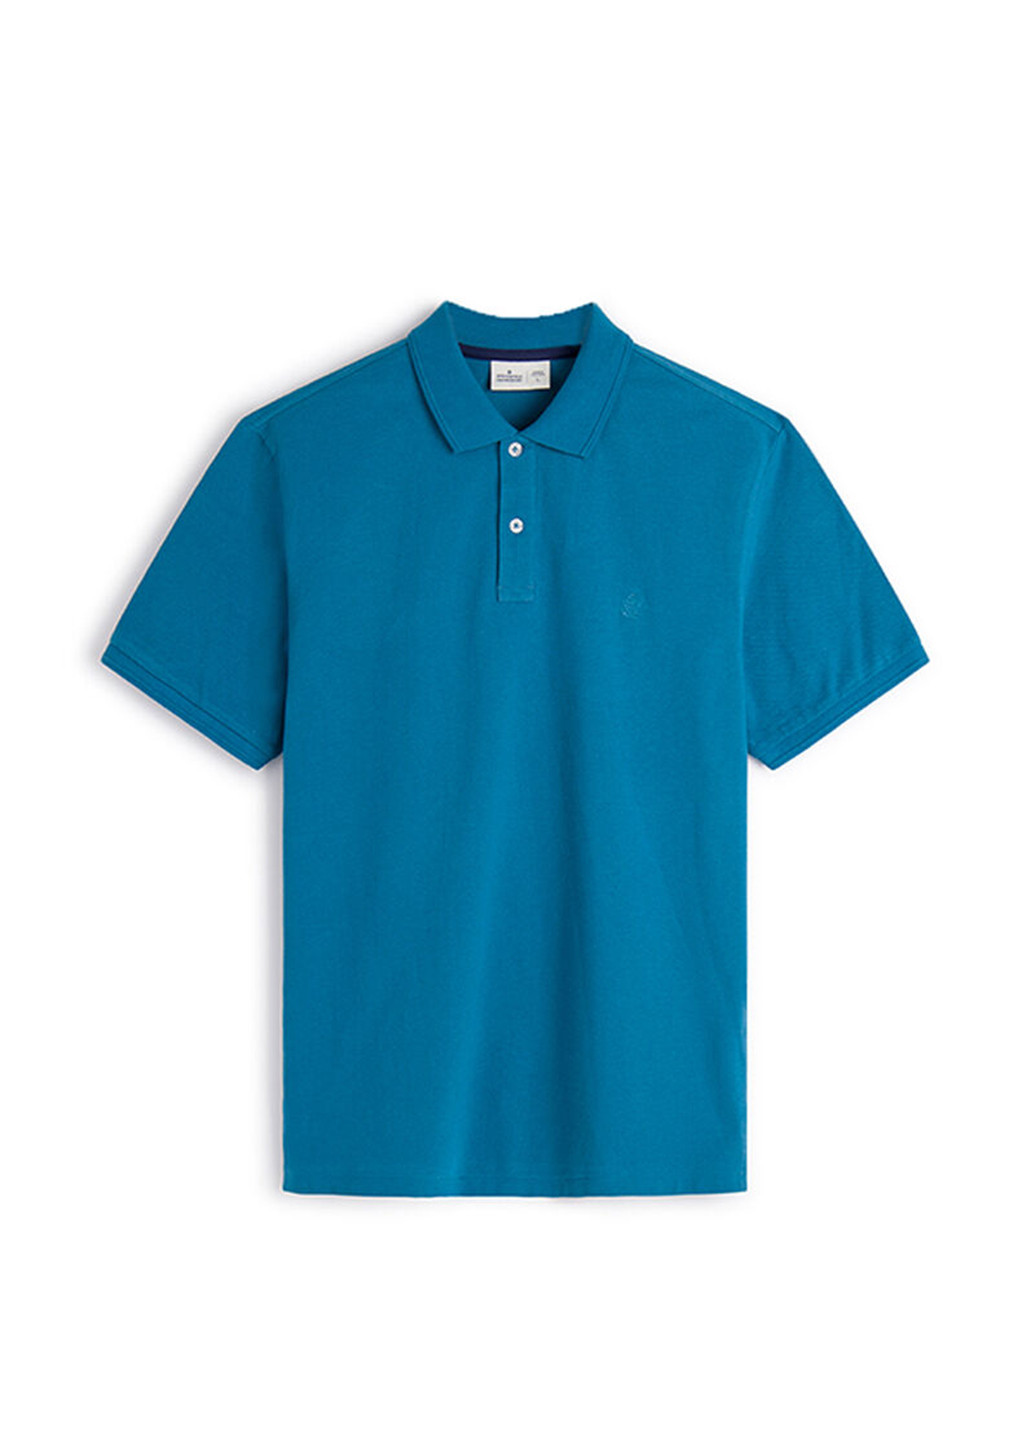 Голубой футболка-поло для мужчин Springfield однотонная